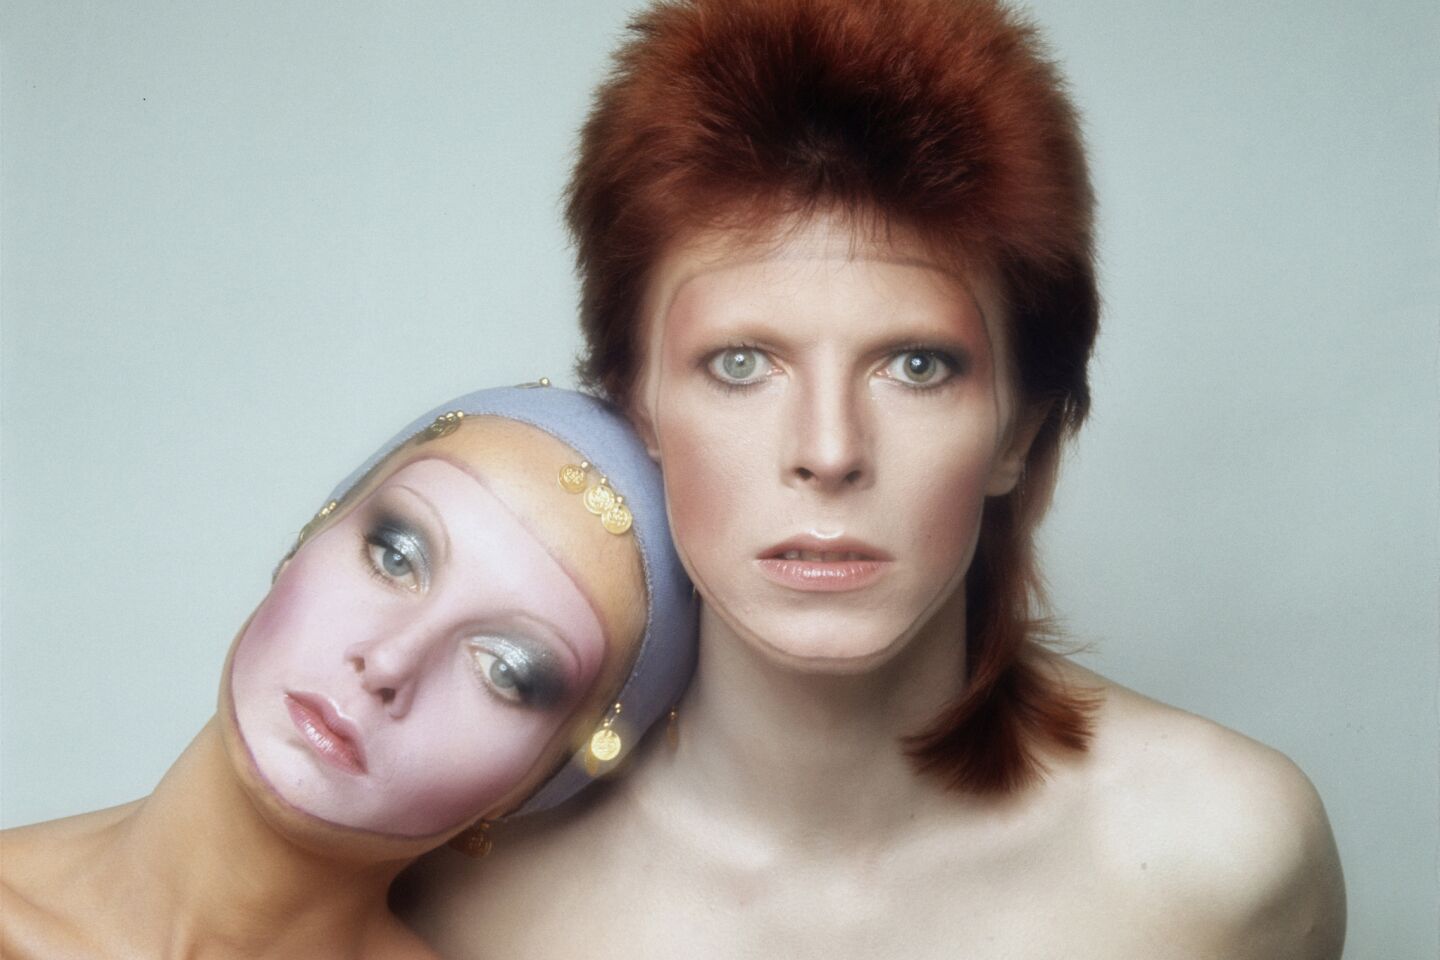 David Bowie | 1947 - 2016